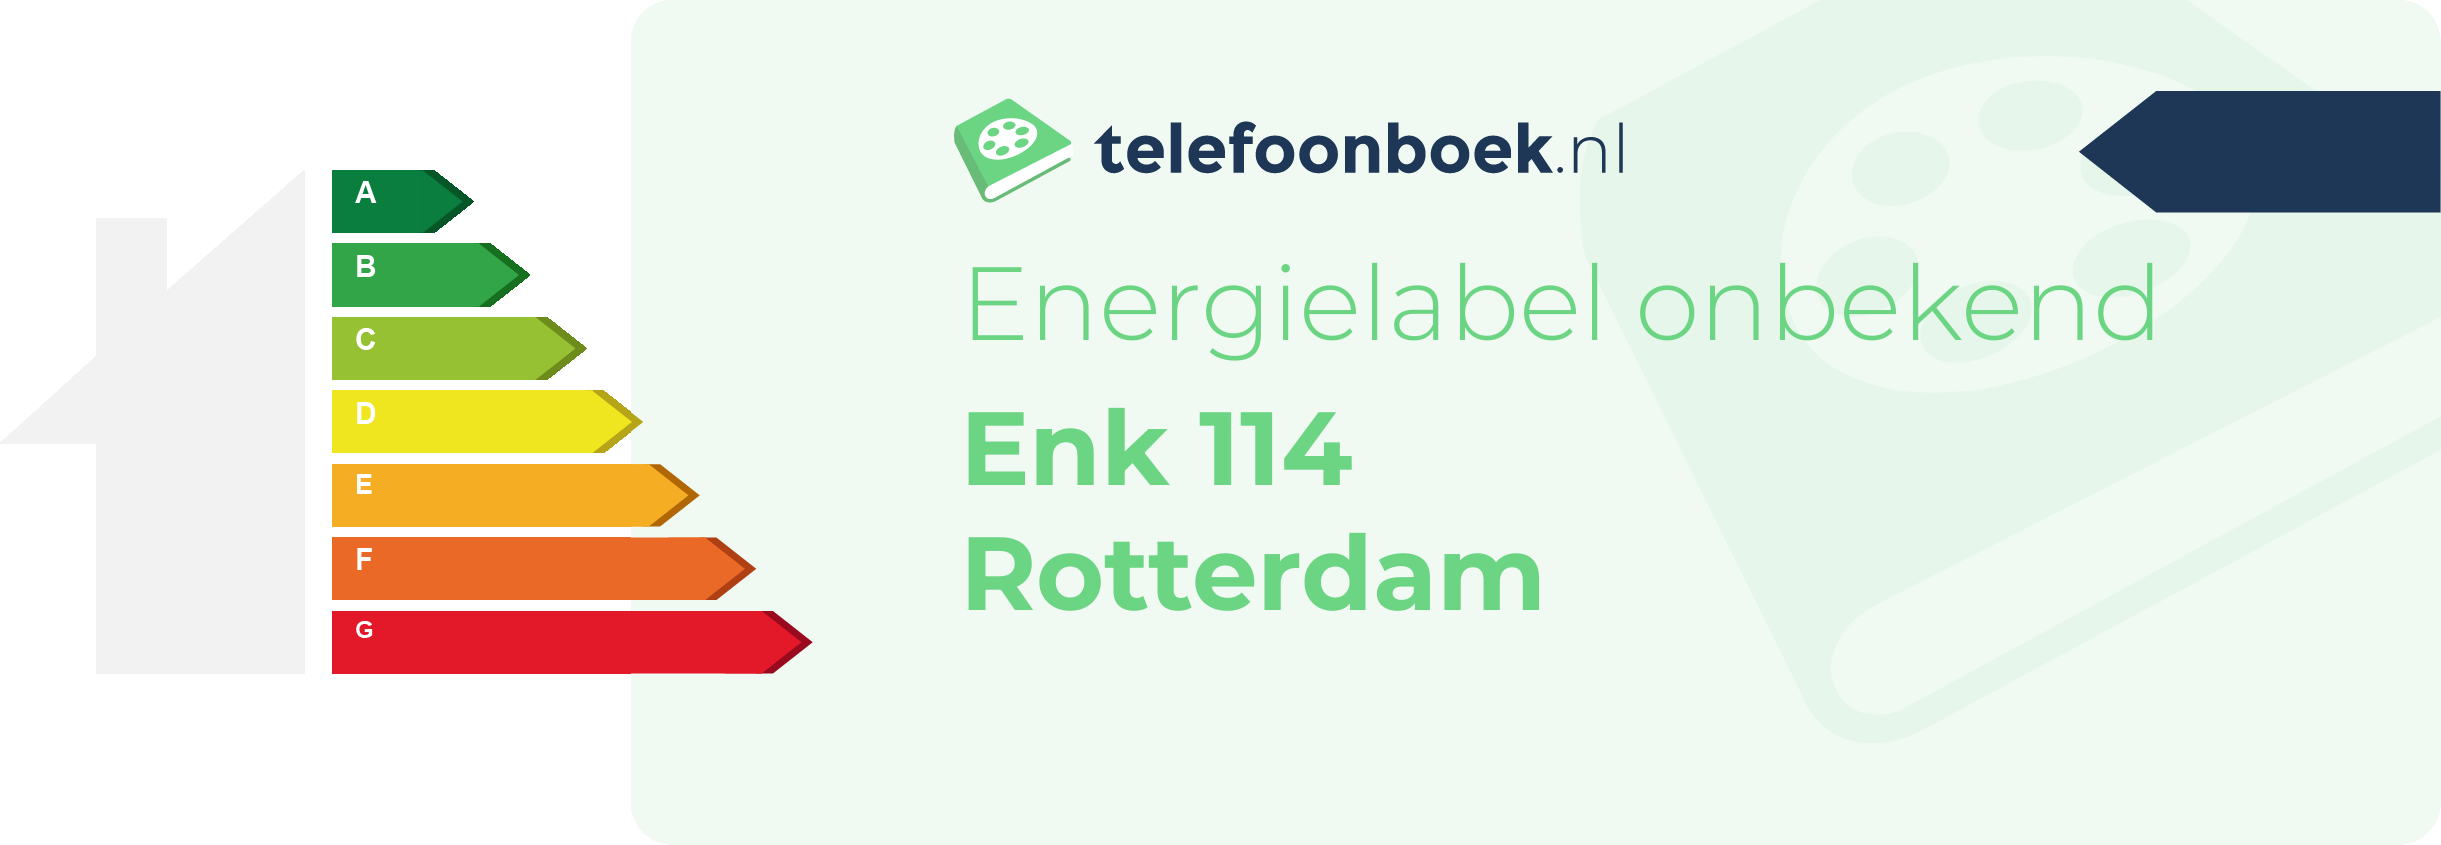 Energielabel Enk 114 Rotterdam